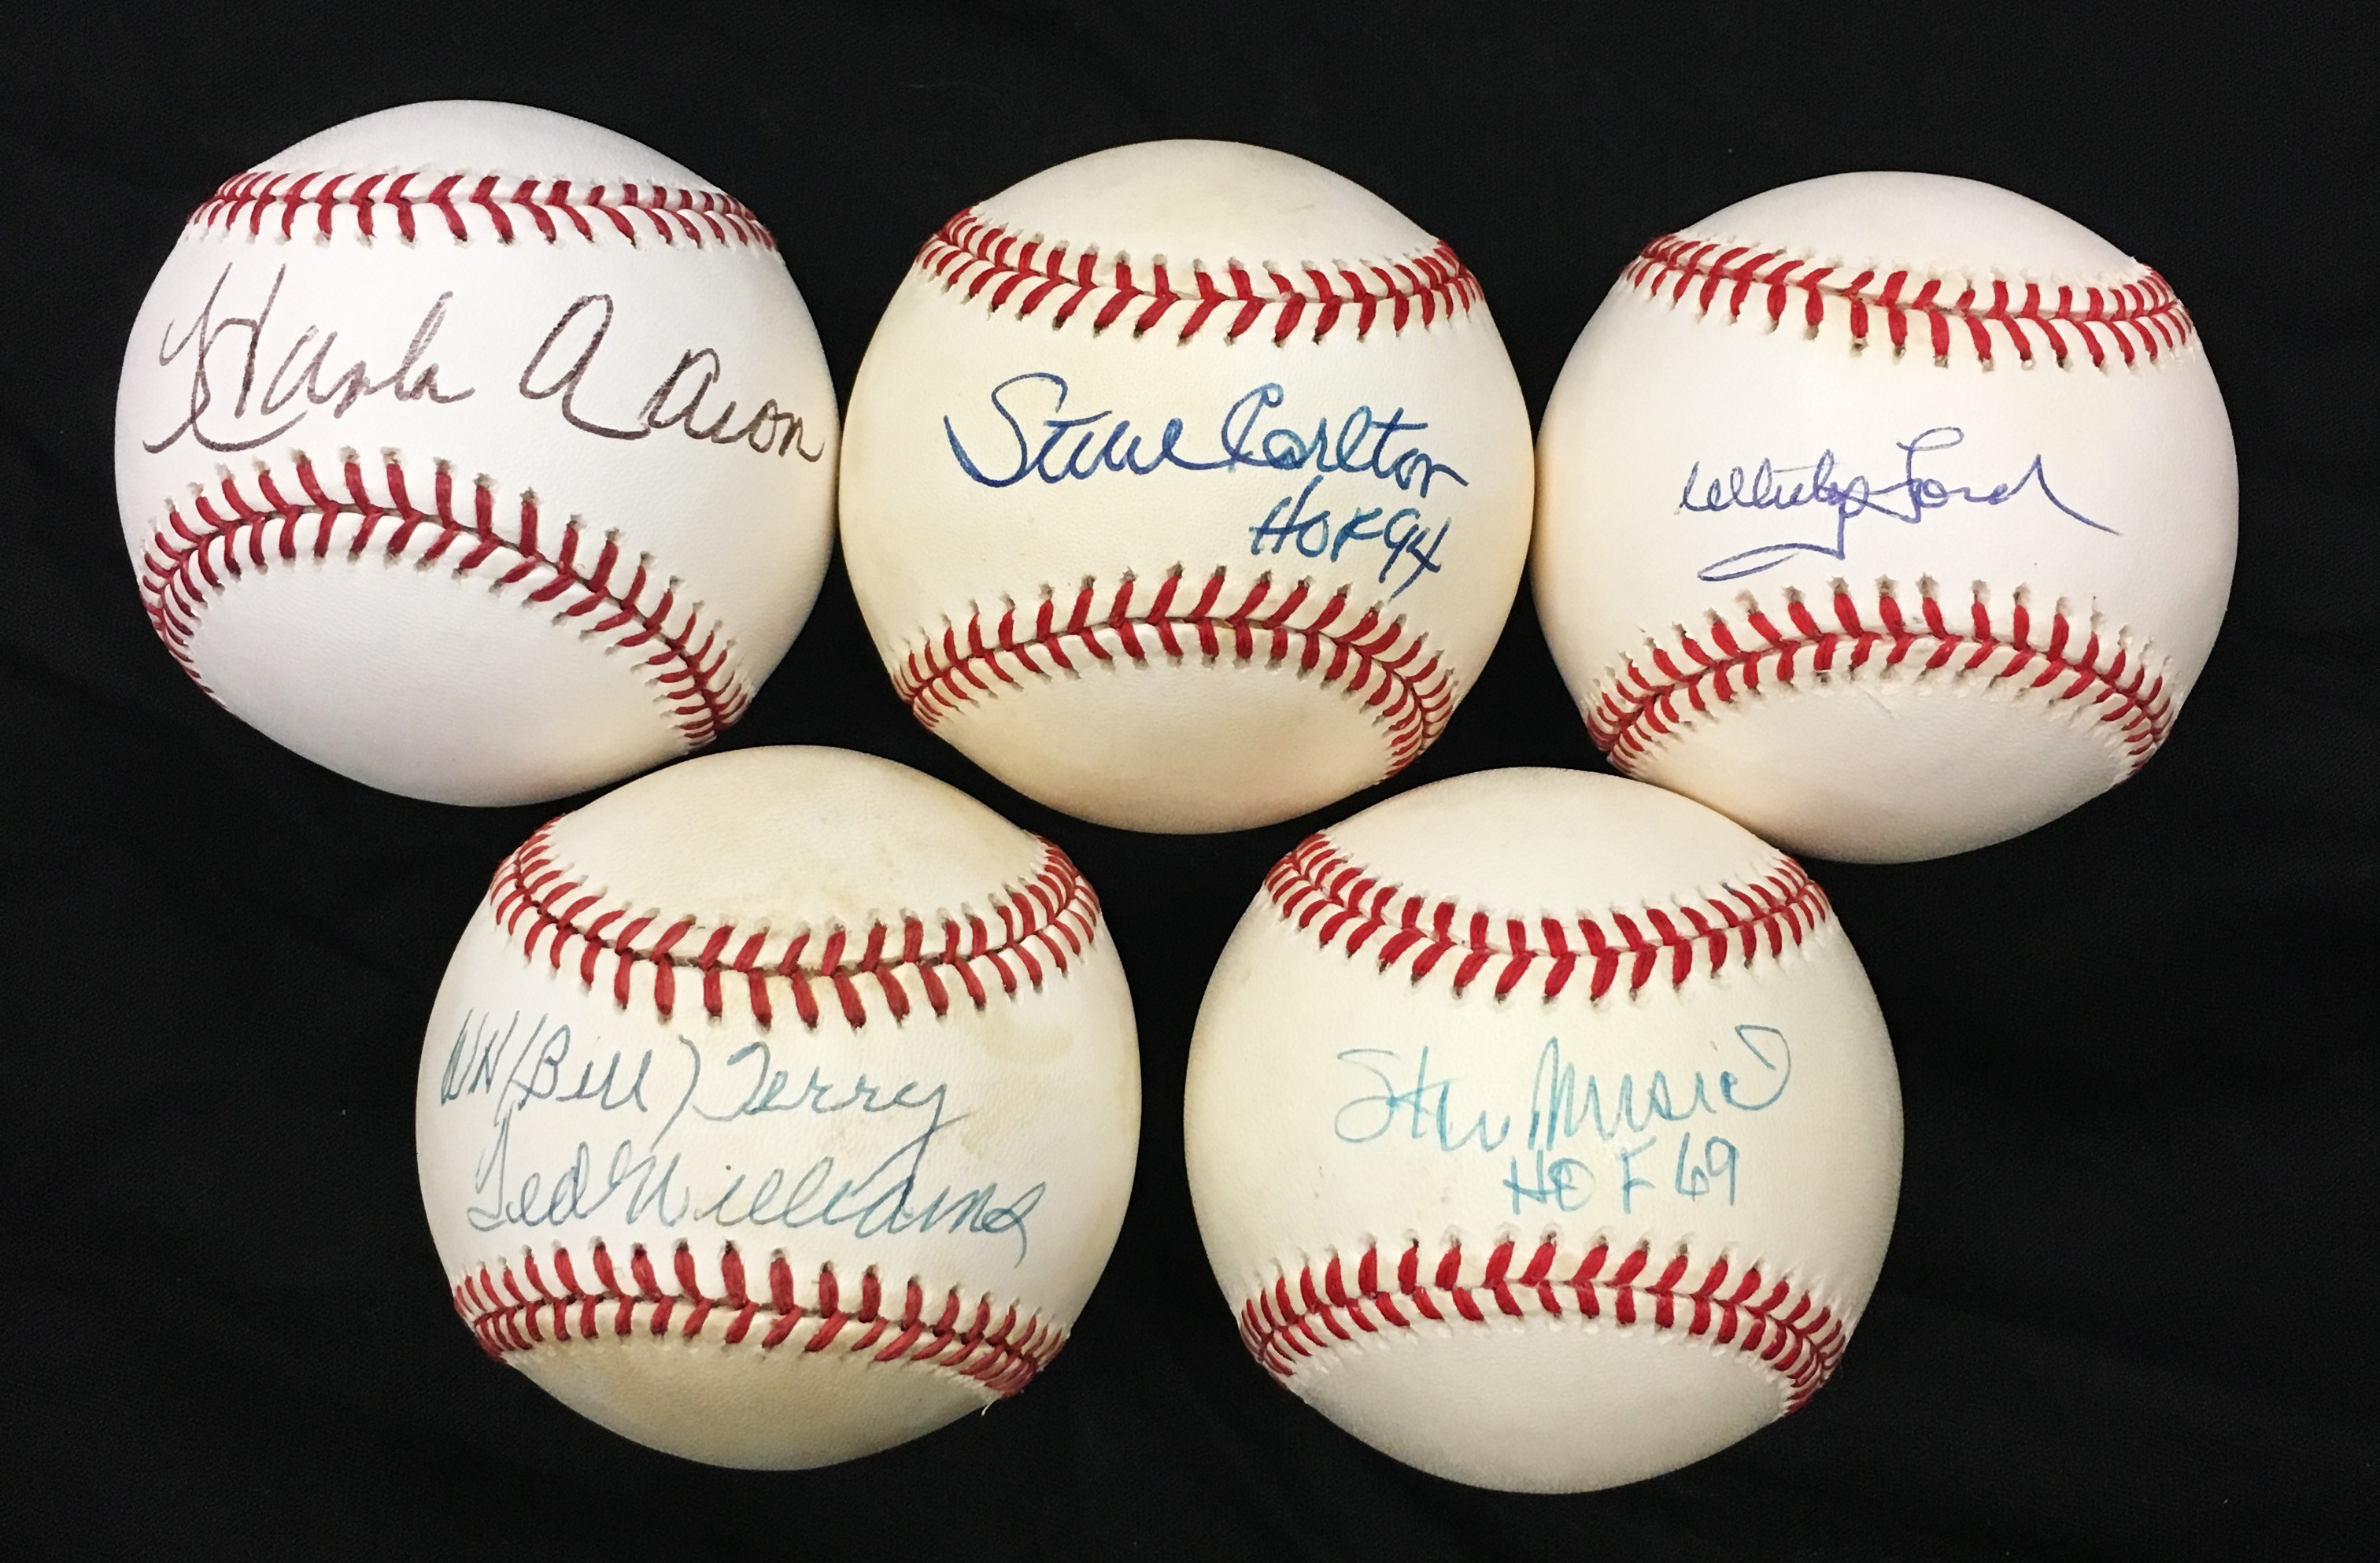 - Hall of Fame Legends Signed Baseballs w/Ted Williams (5)